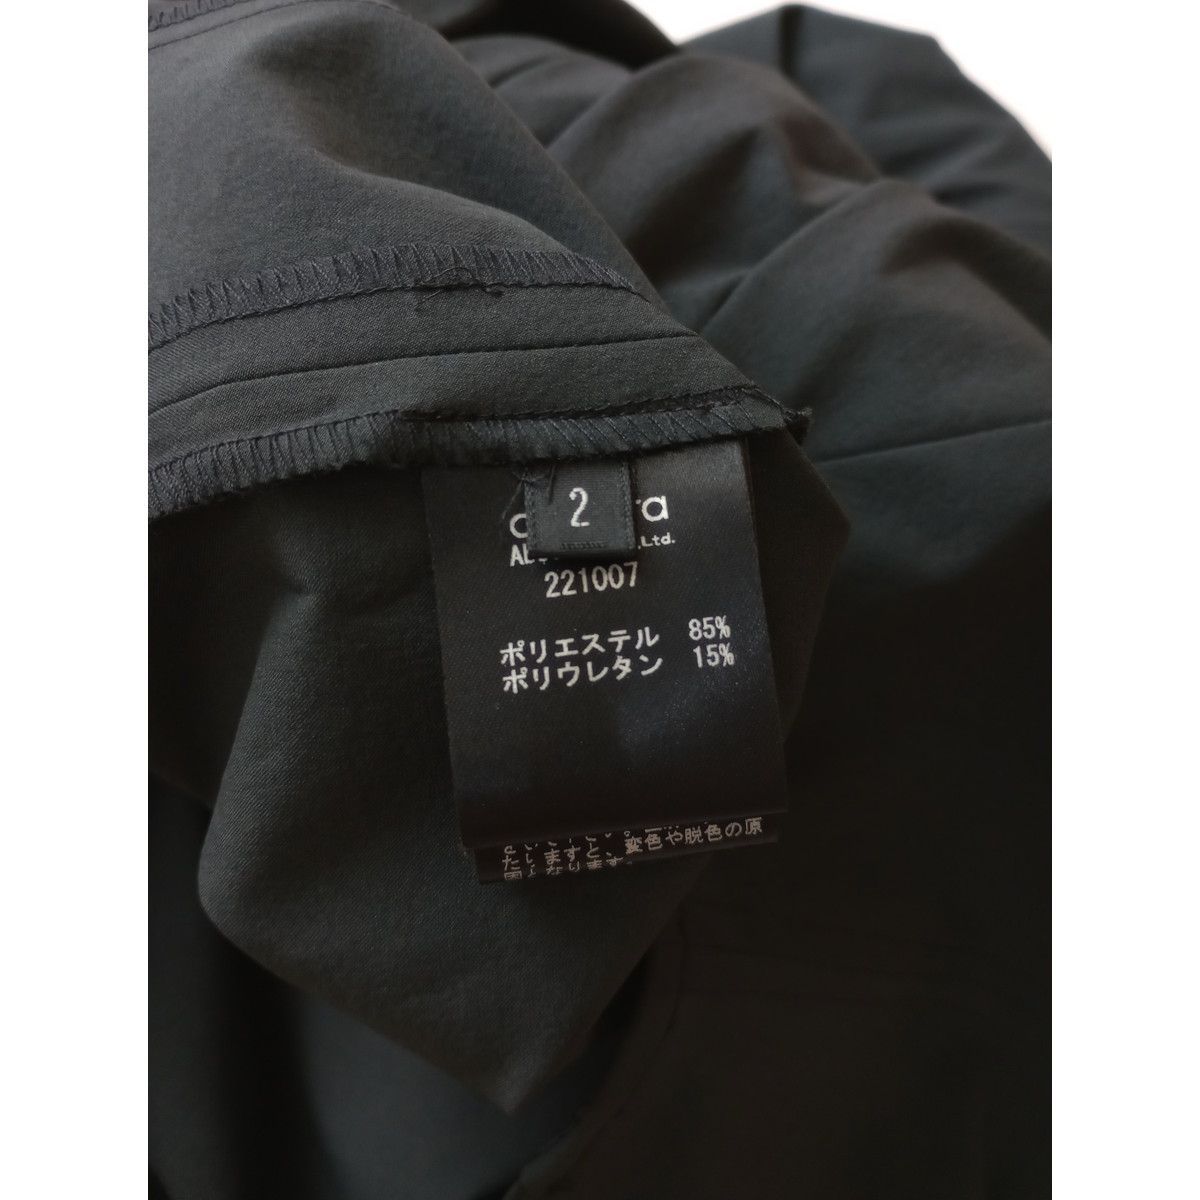 araara アラアラ Half-Sleeve All-in-one ハーフスリーブ オールインワン 黒 ブラック 2 日本製 (92K+7211) 24N